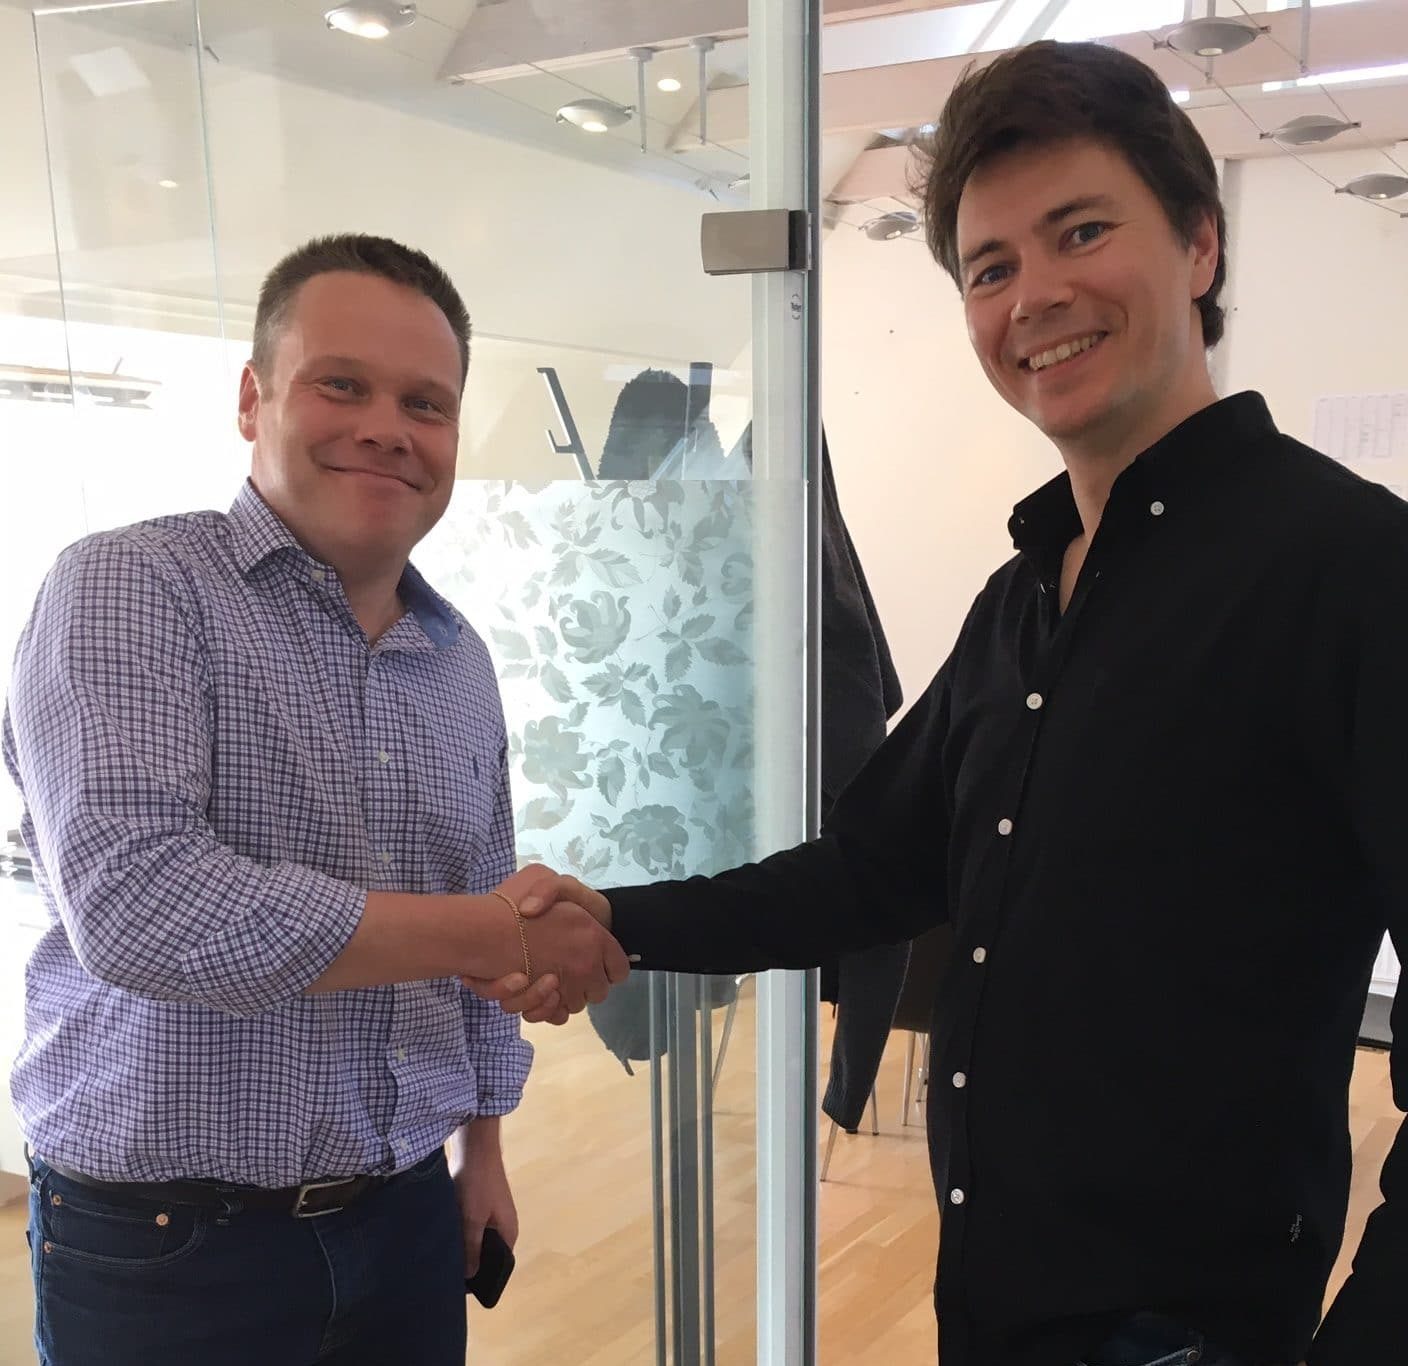 Radonova signe un accord de coopération avec le danois RadonHuset